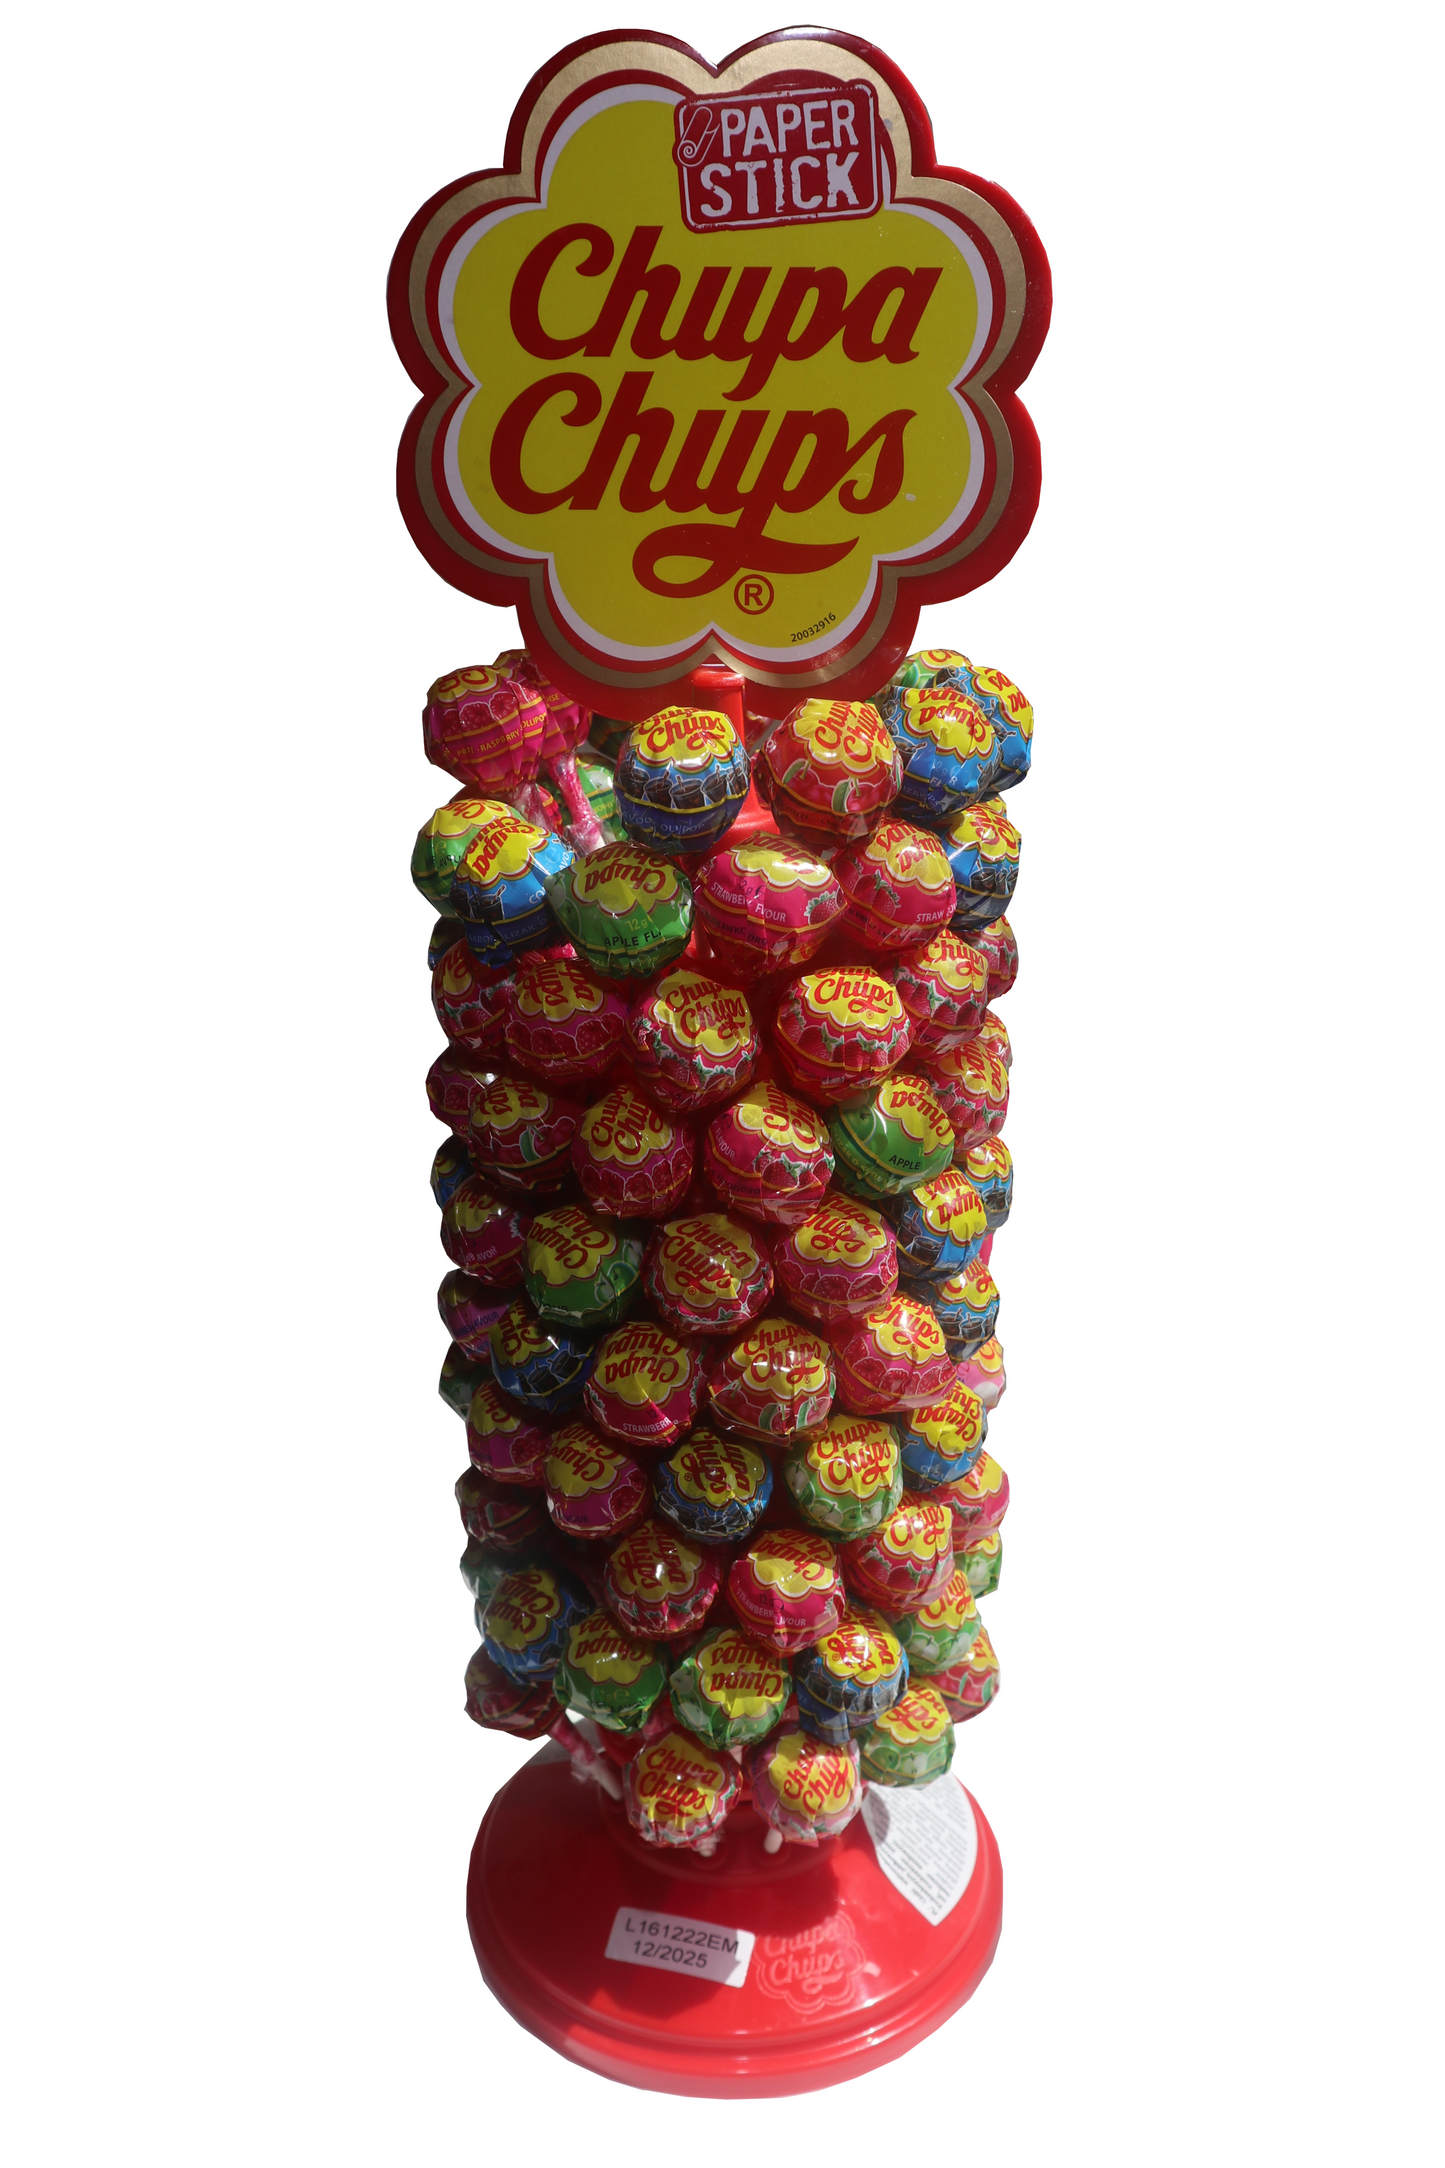 Chupa Chups, The Candy Encyclopedia Wiki